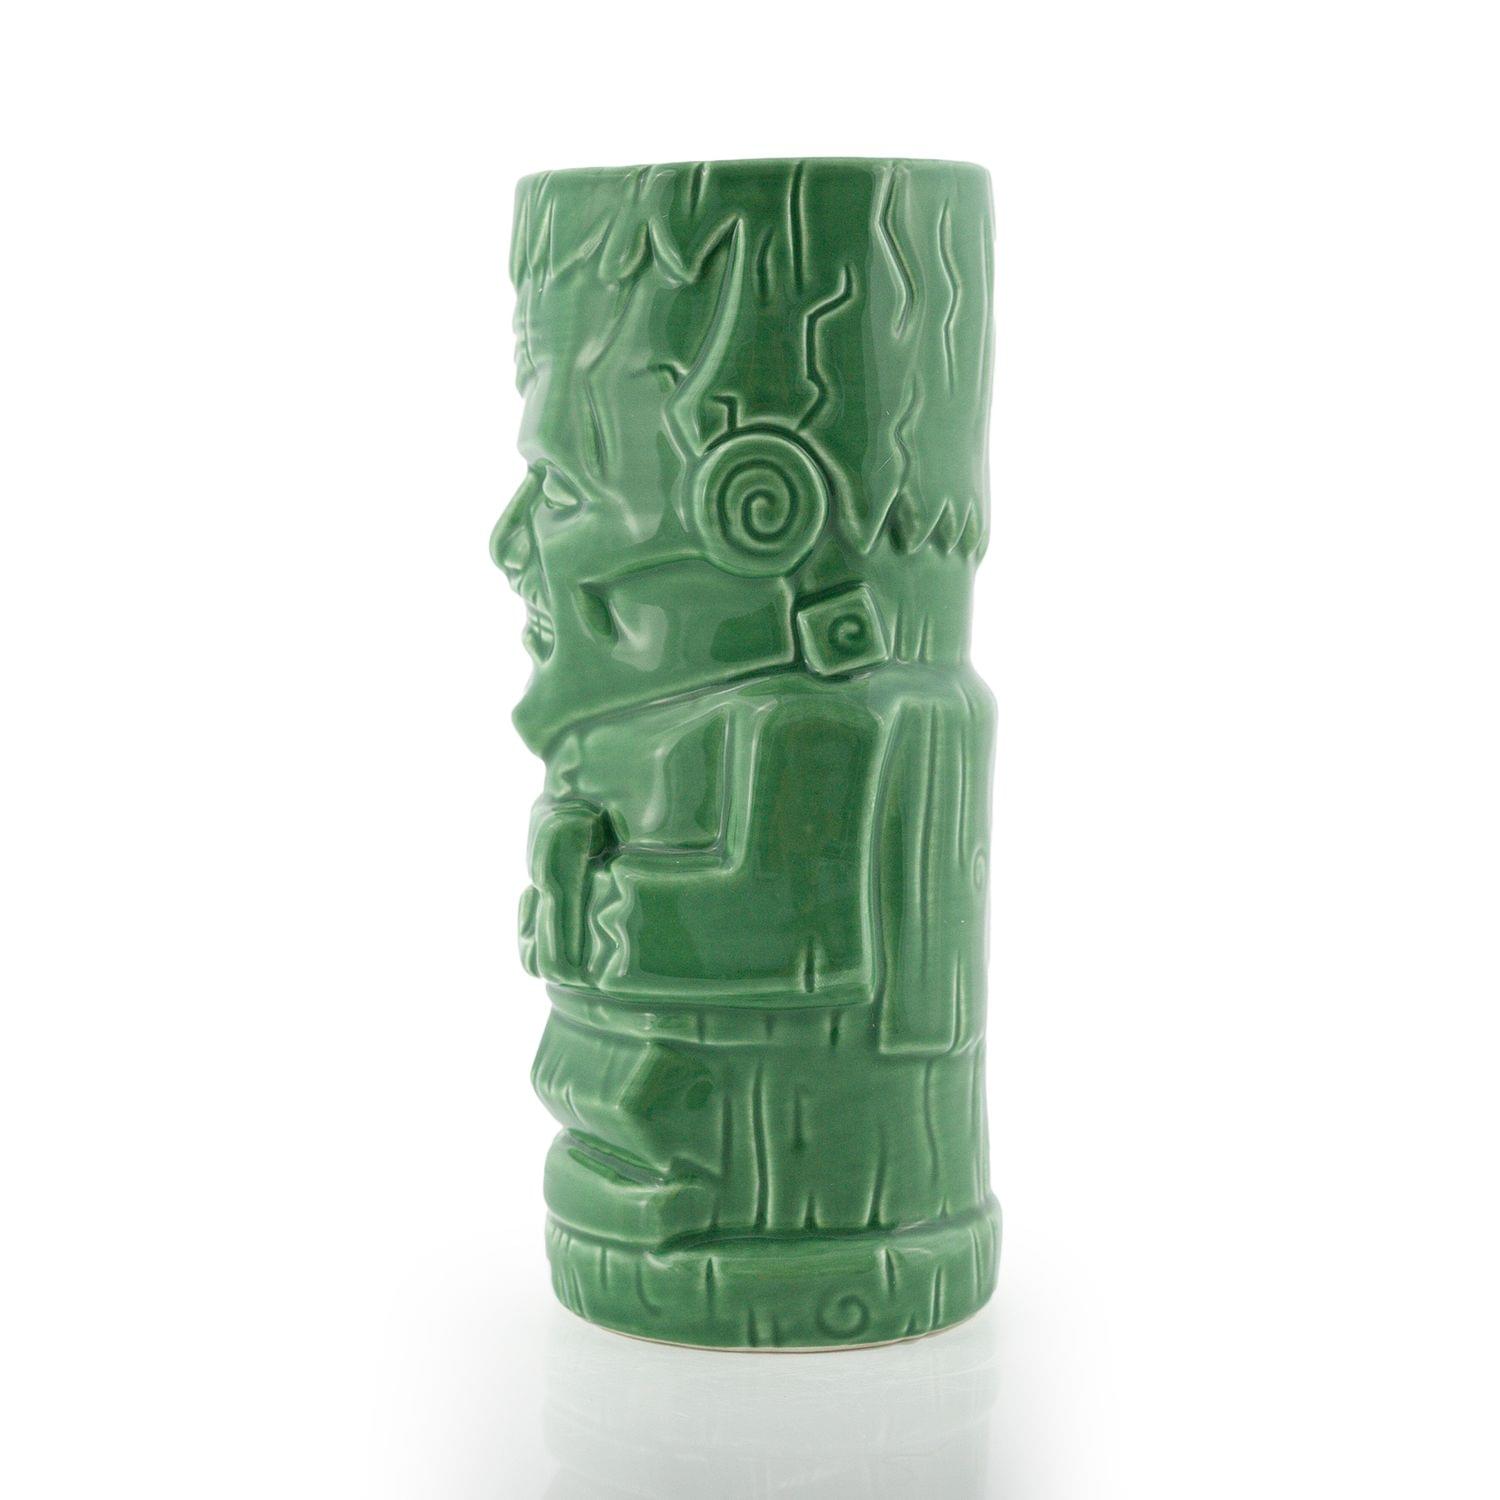 Geeki Tikis Monsters Frankenstein Ceramic Mug | Holds 18 Ounces